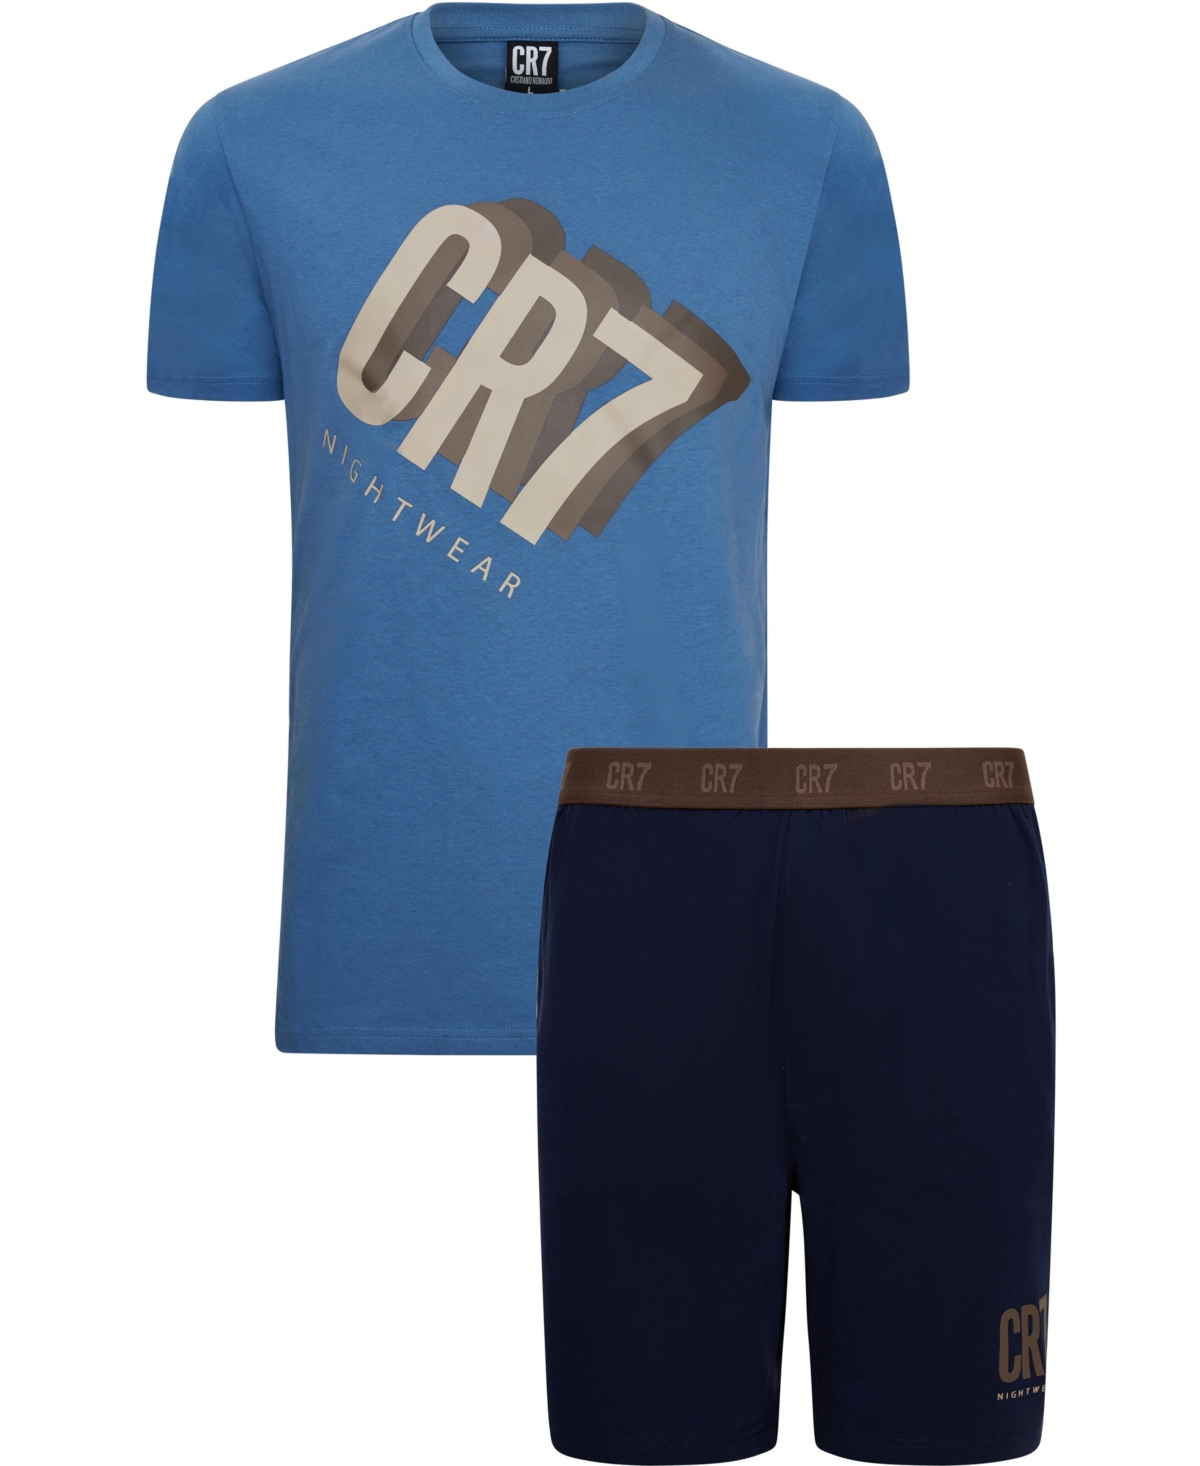 Men's Cotton Loungewear Top and Short Set - Blue, Brown, Tan